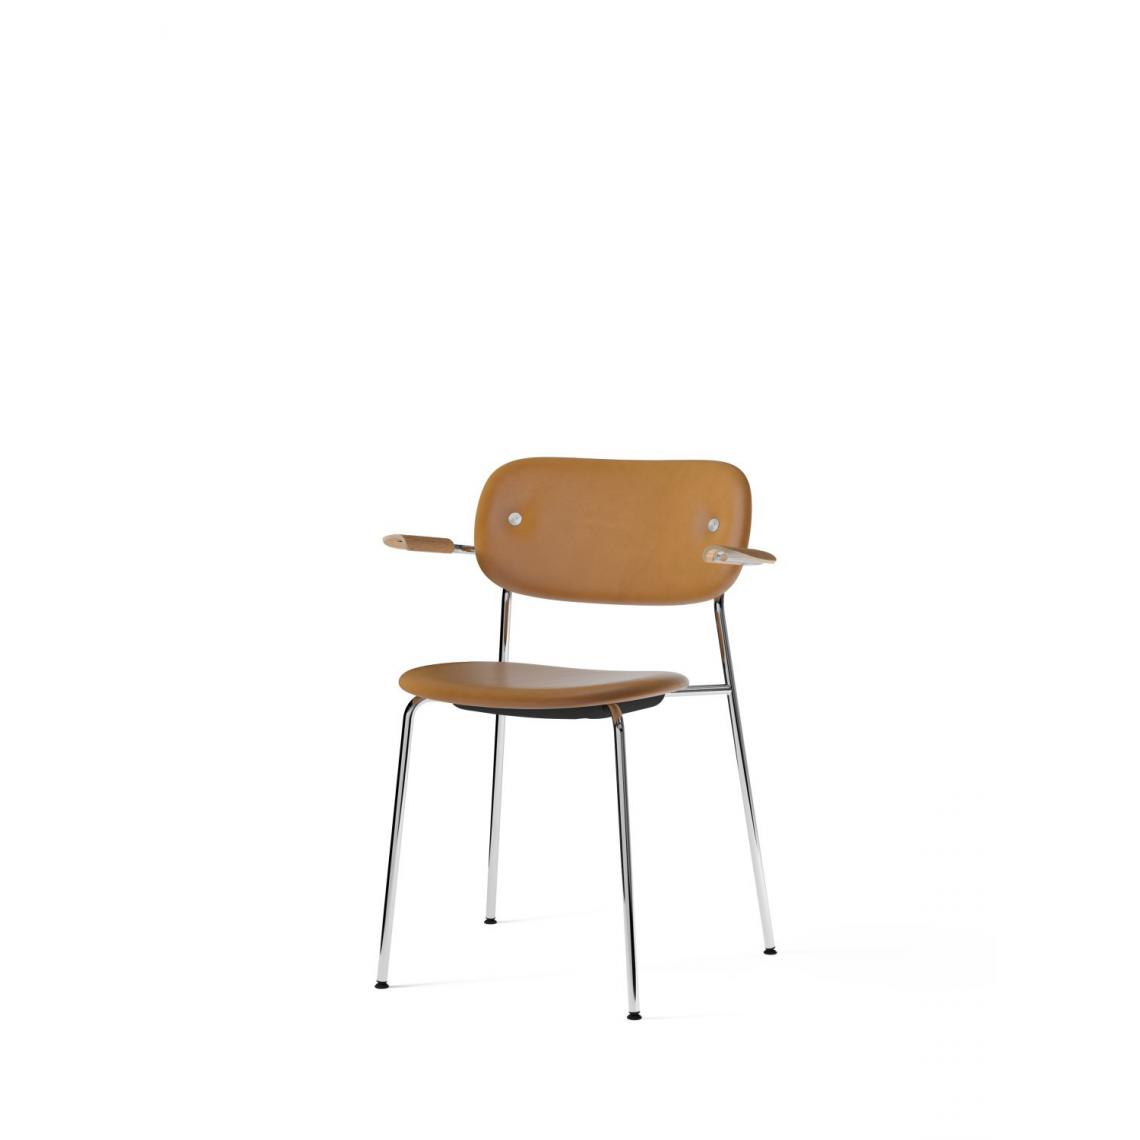 Menu - Co Dining Chair avec accoudoir - MenuCoChairDakar0250 - chêne, naturel - chrome - Chaises